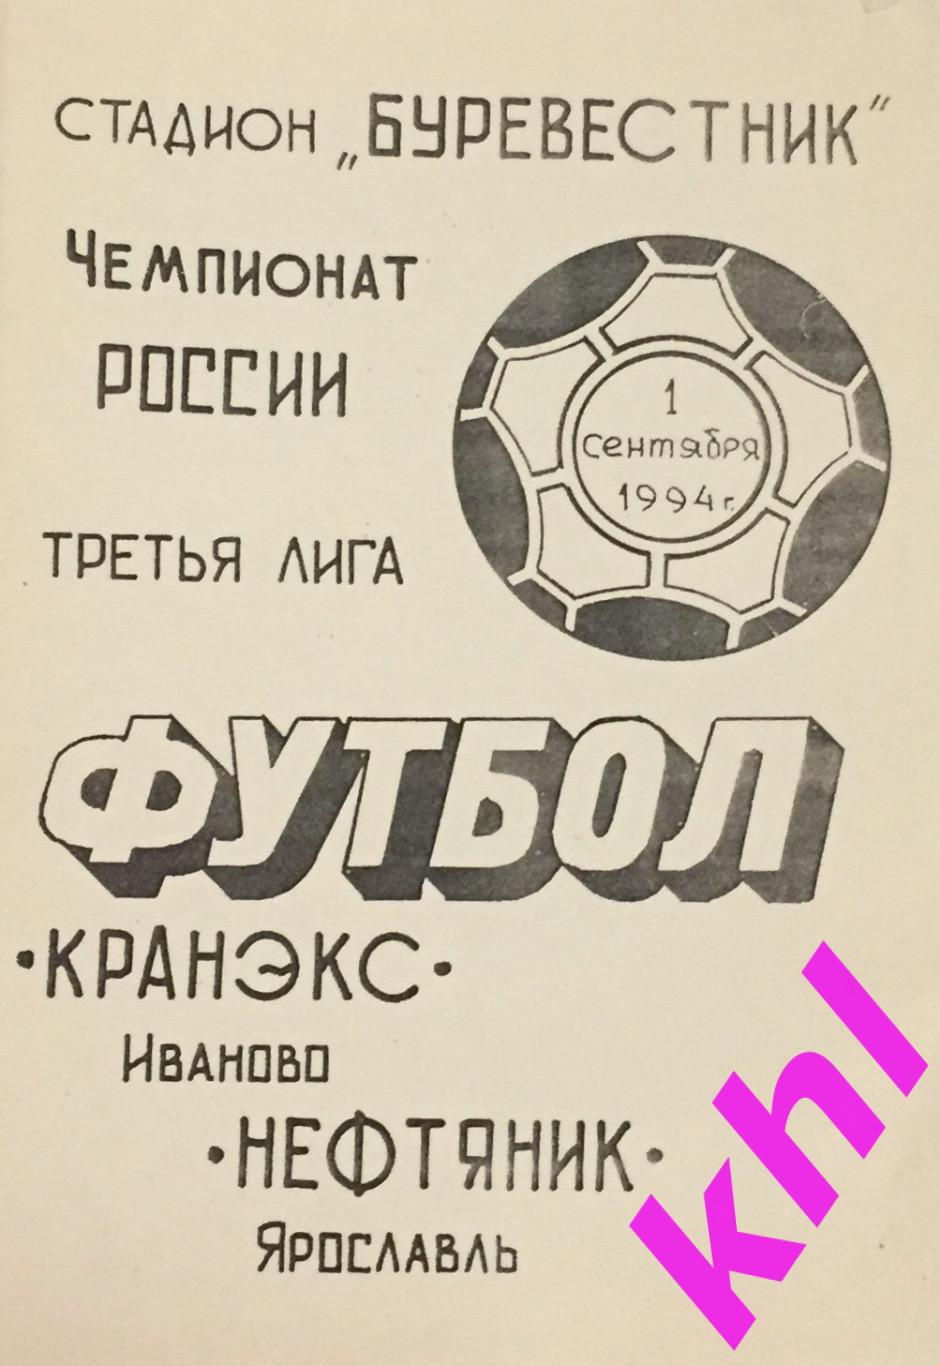 Кранэкс Иваново - Нефтяник Ярославль 1 сентября 1994